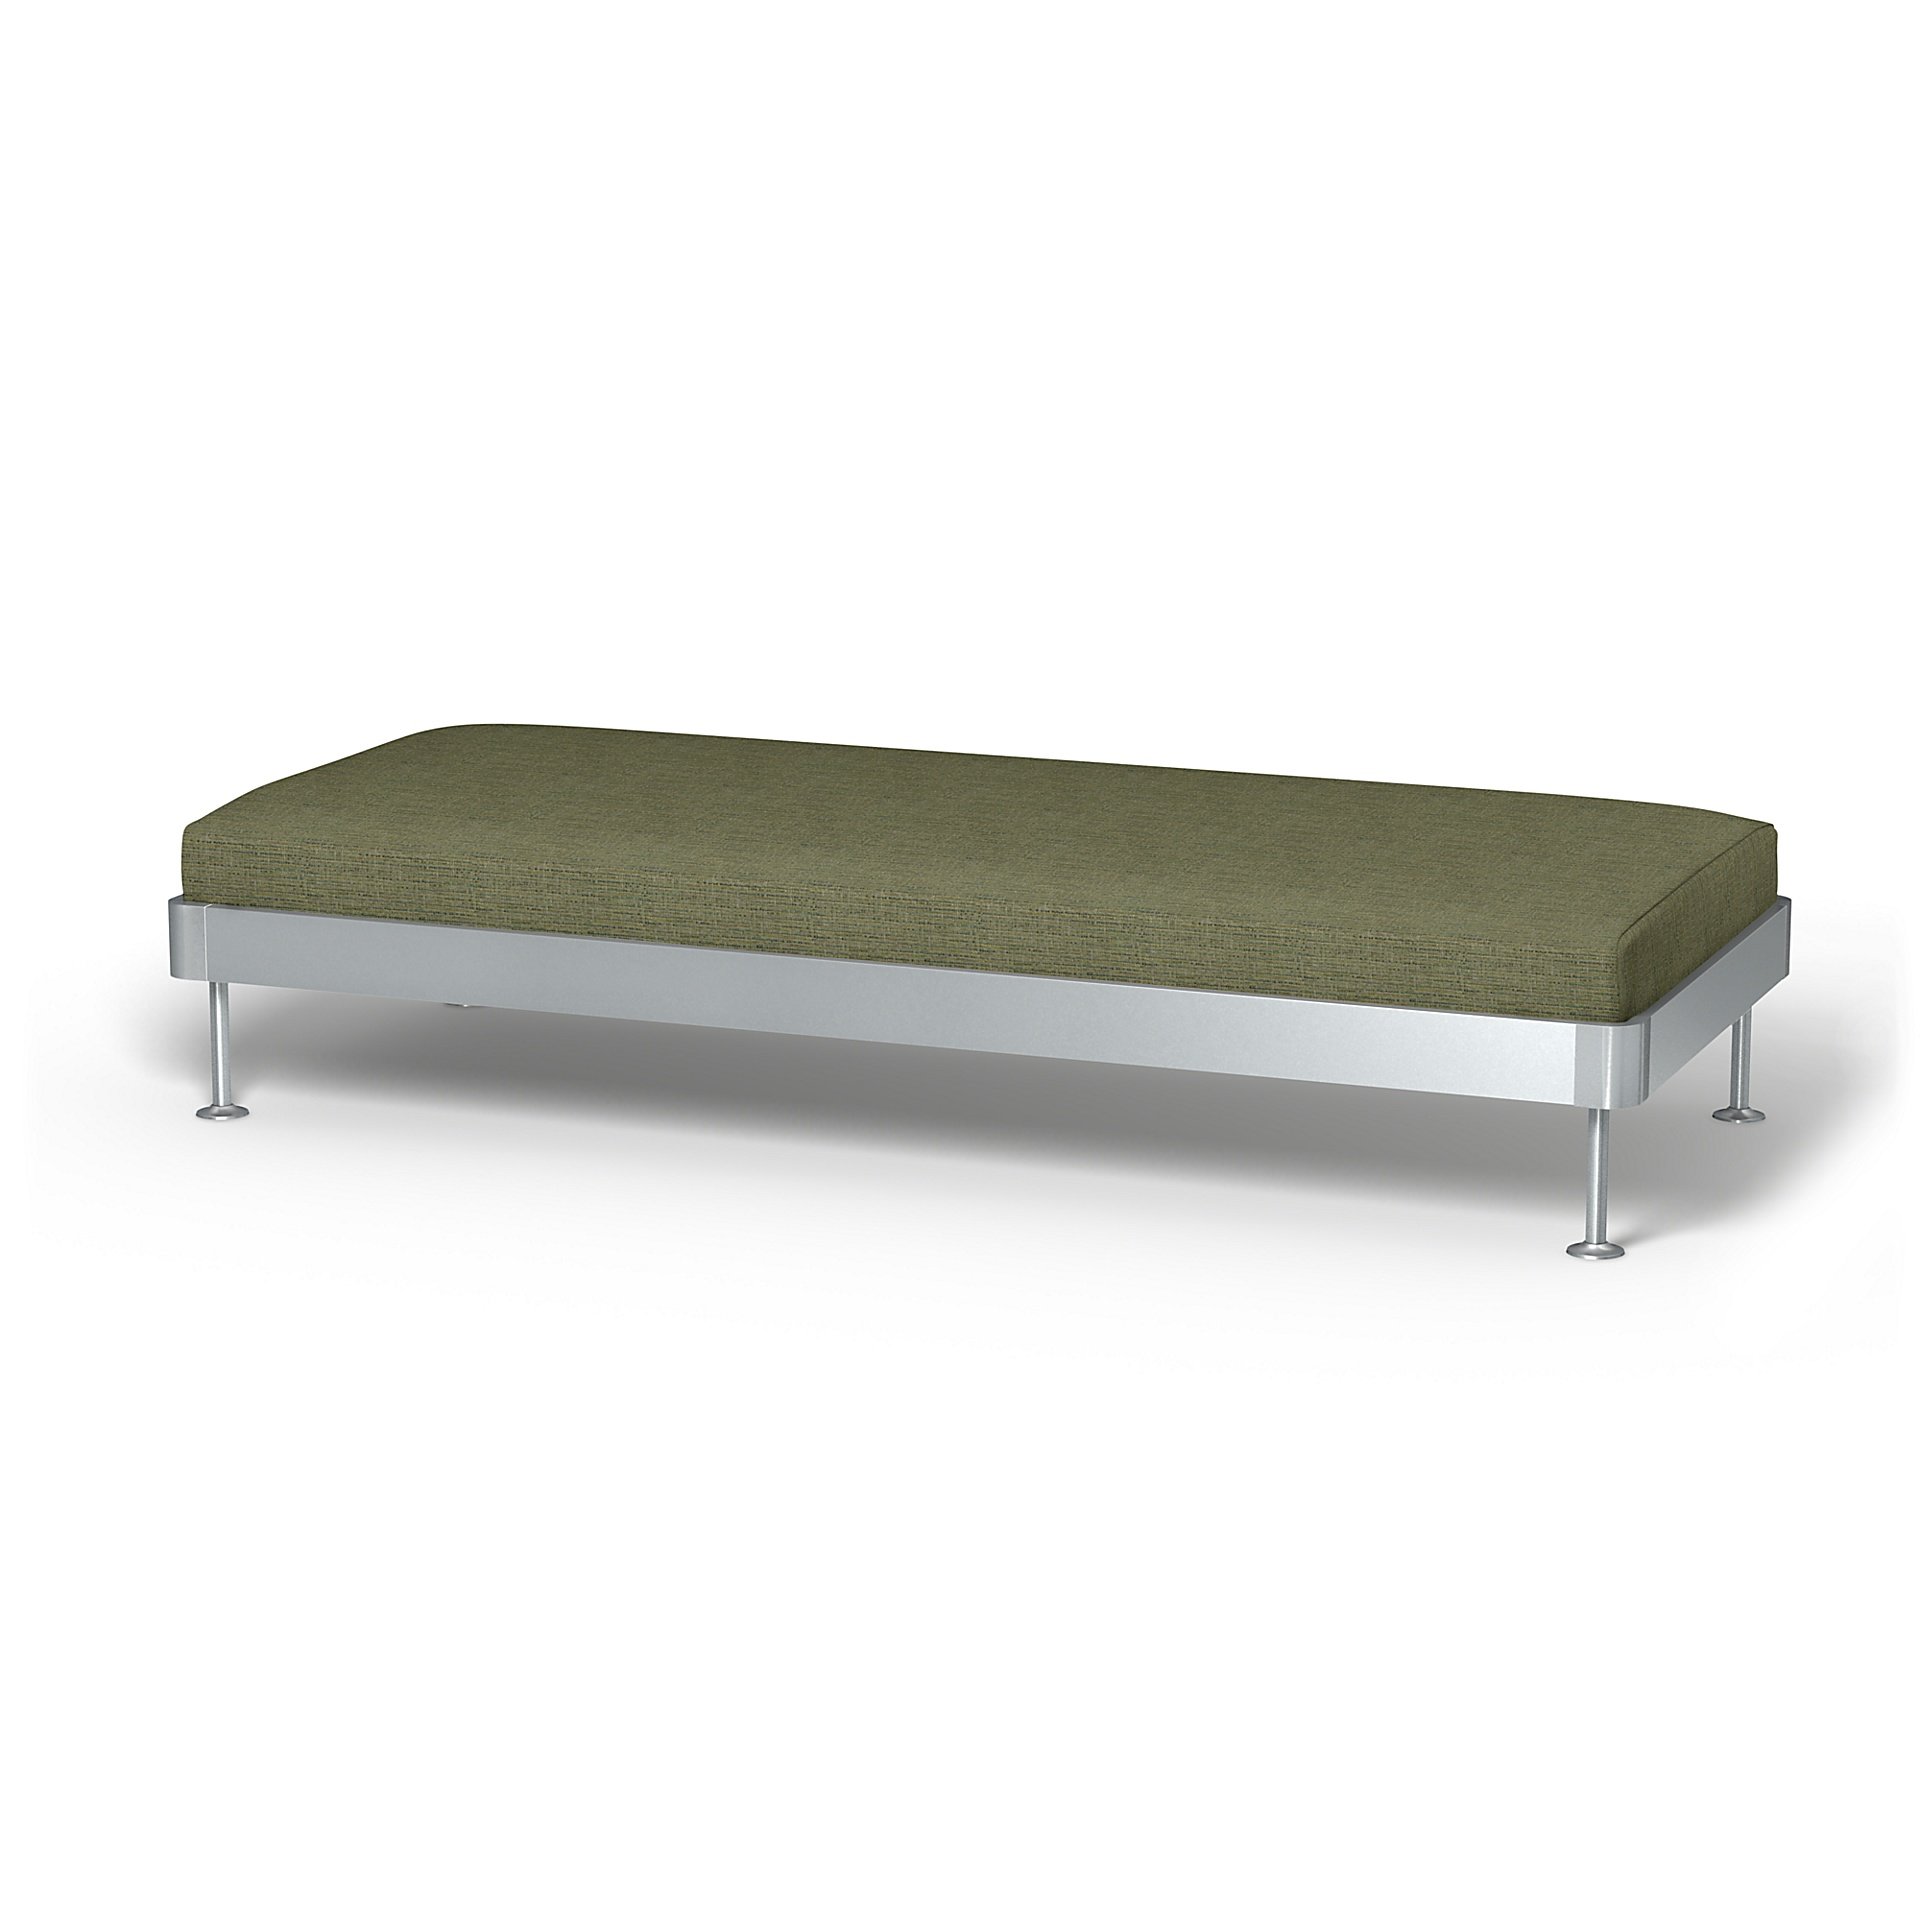 IKEA - Delaktig 3 Seat Platform Cover, Meadow Green, Boucle & Texture - Bemz